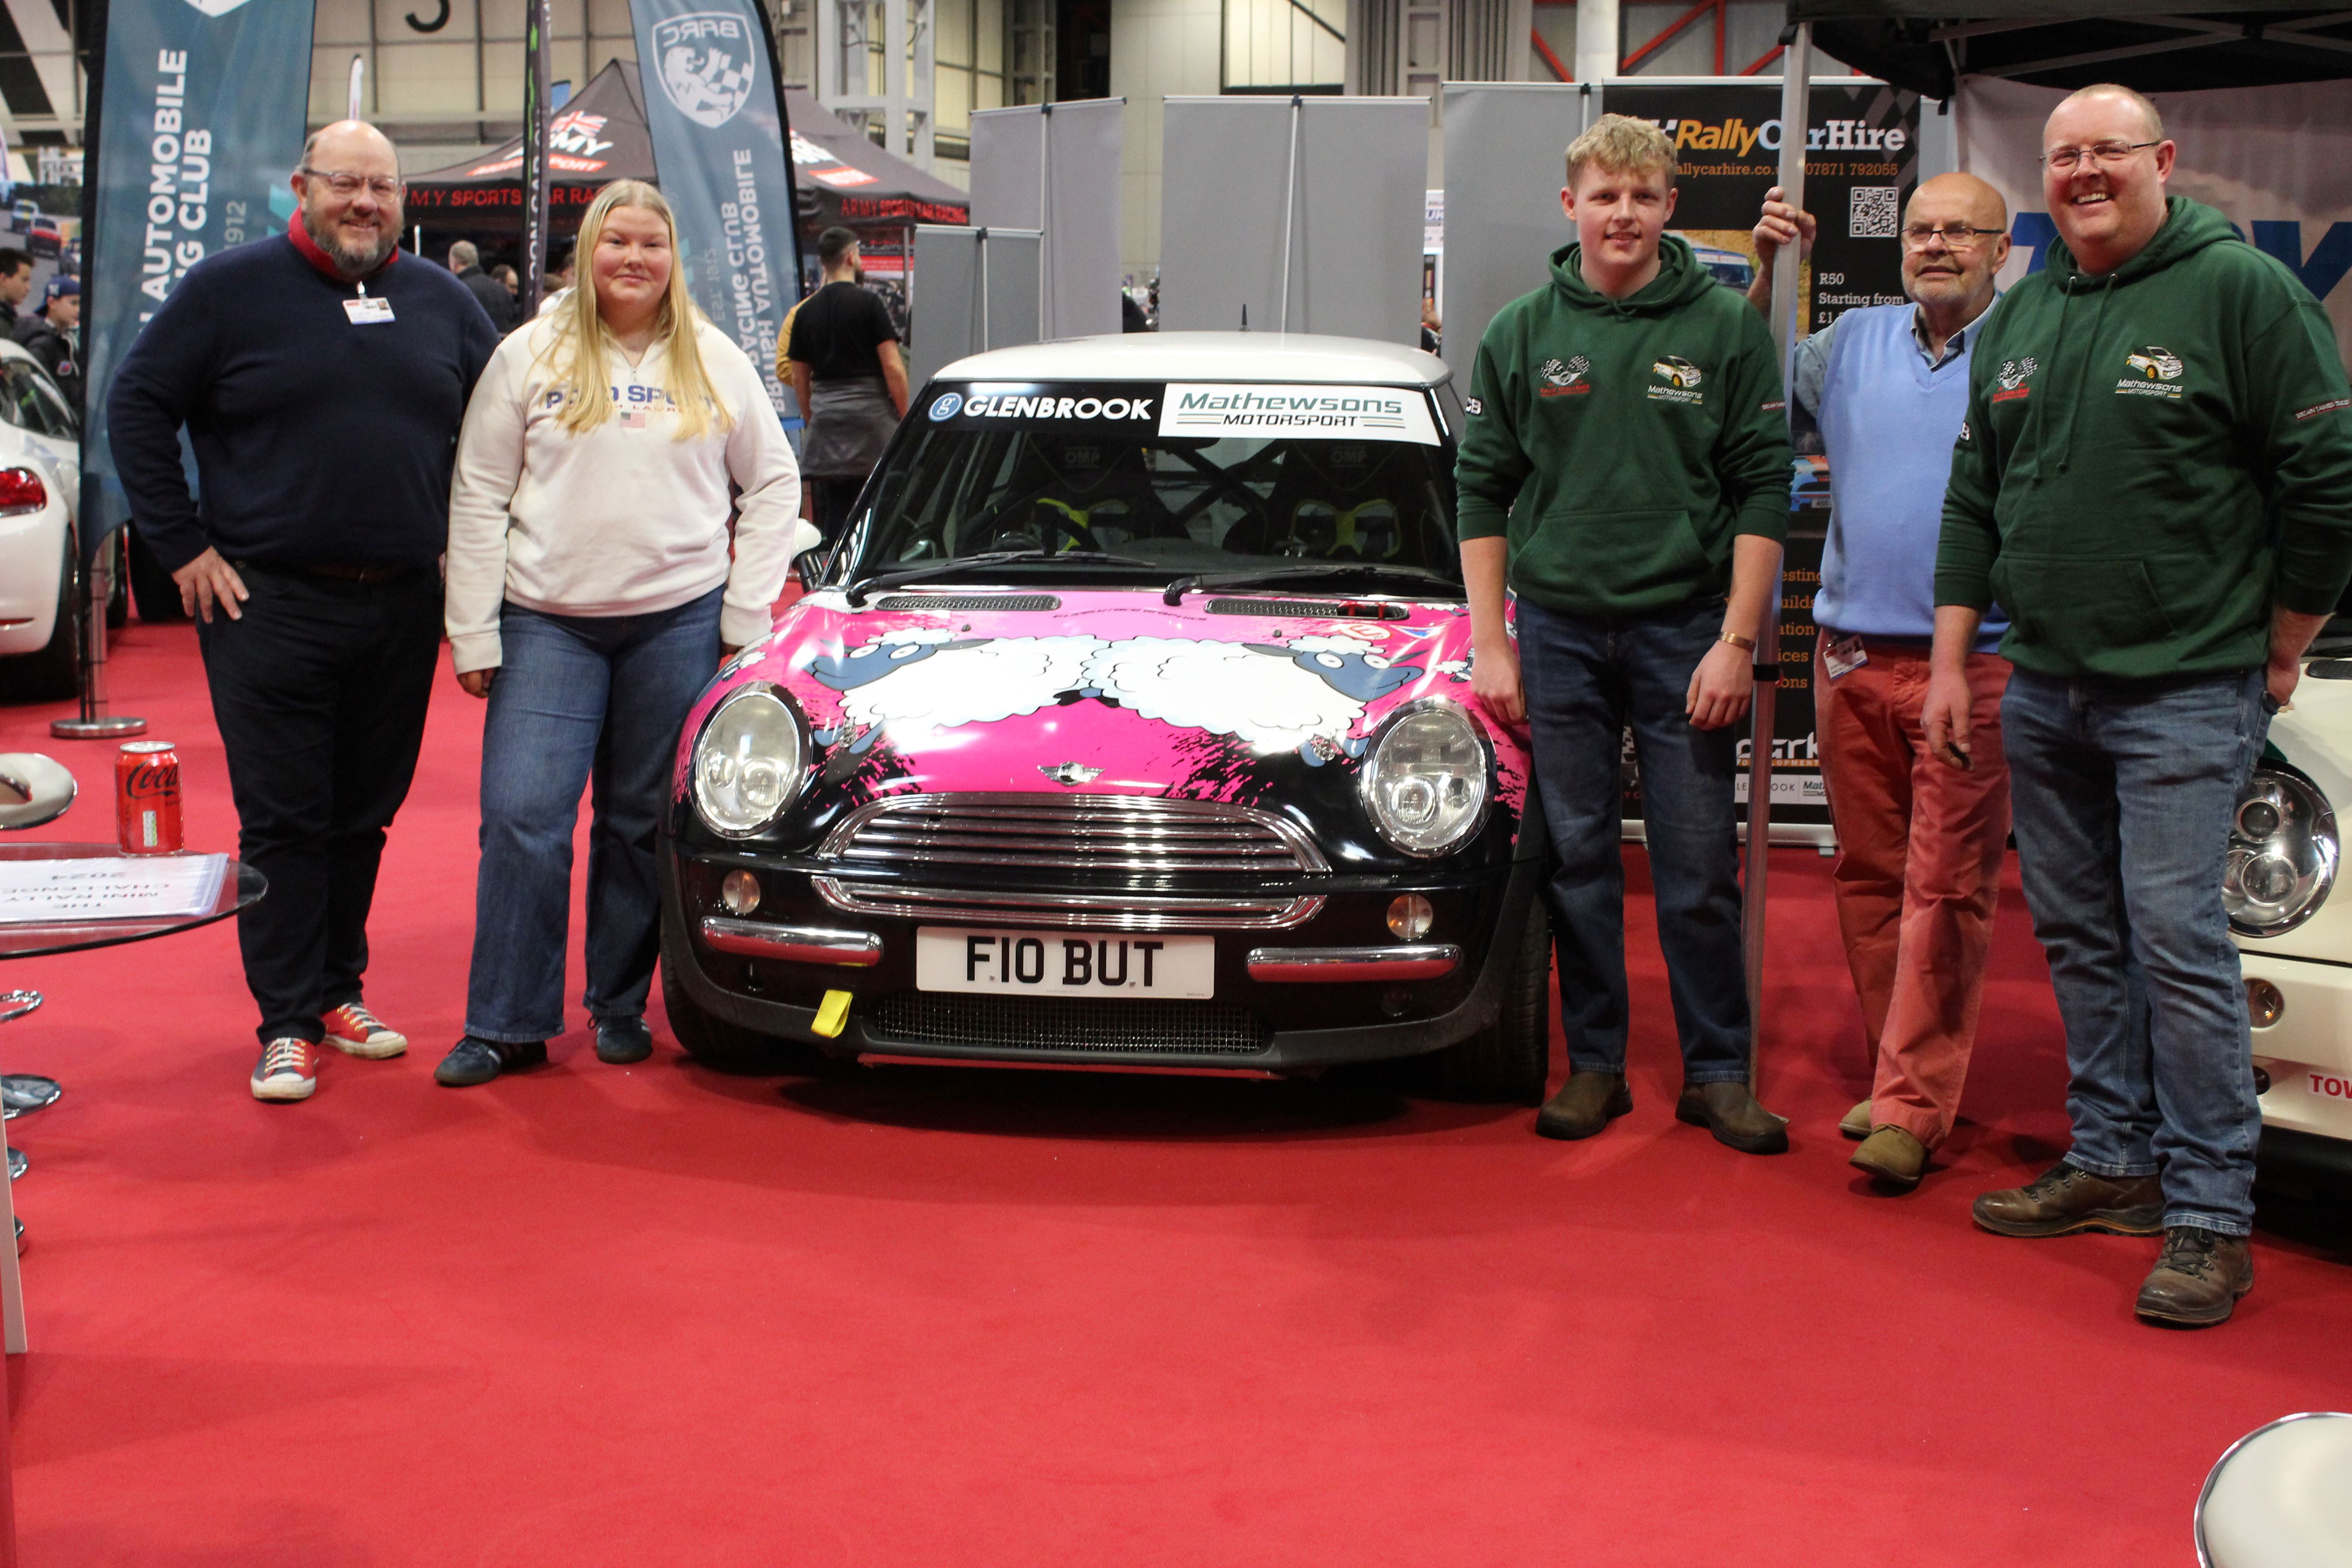 Mathewsons Motorsport confirm Mini Rally Challenge Sponsorship